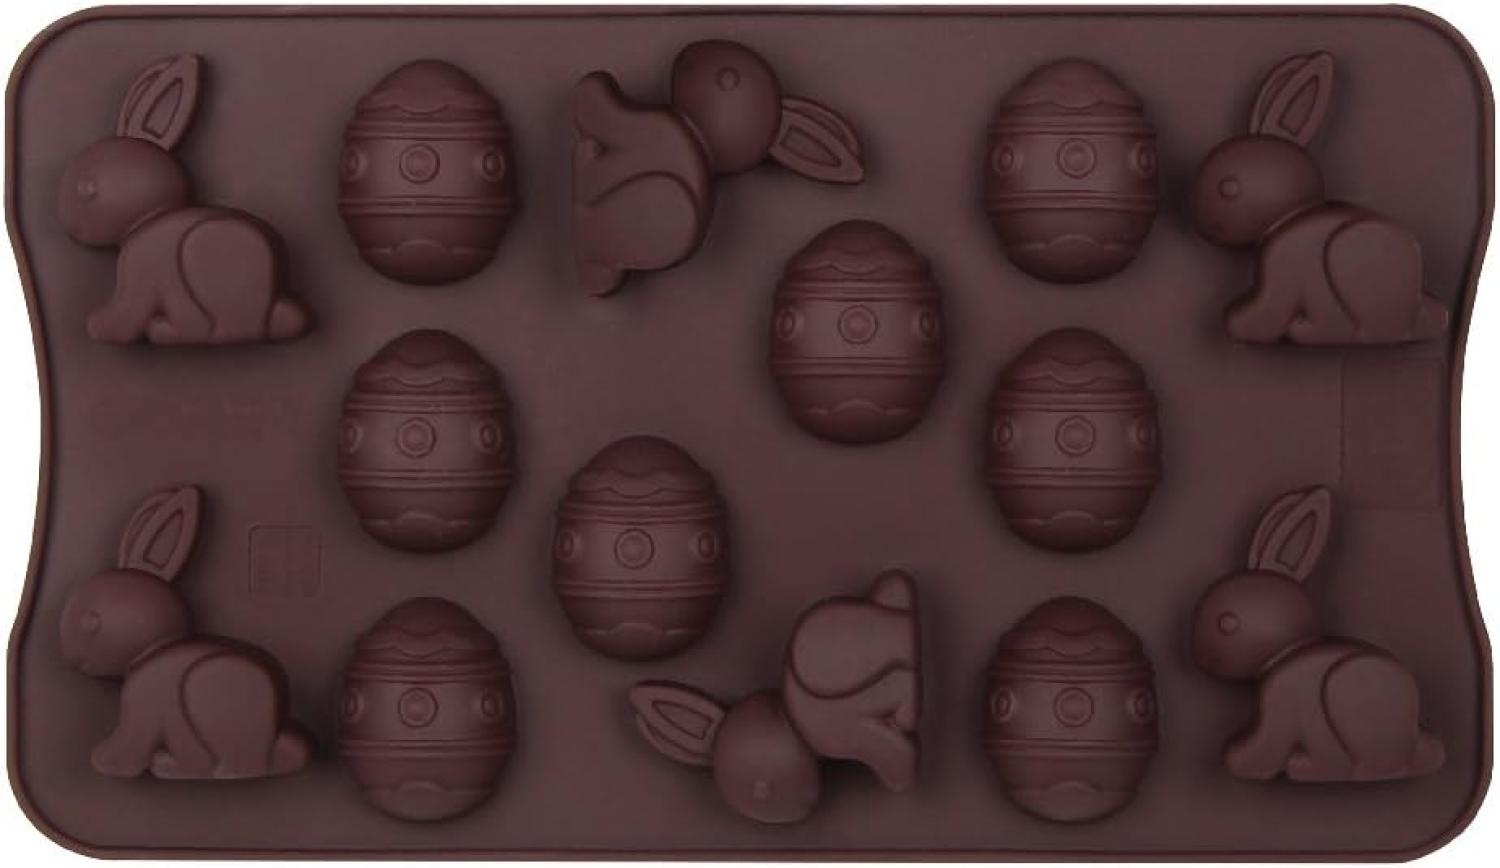 Dr. Oetker - Pralinenform Ostern 2500 Schokoladenform Confiserie Silikon Eier Bild 1